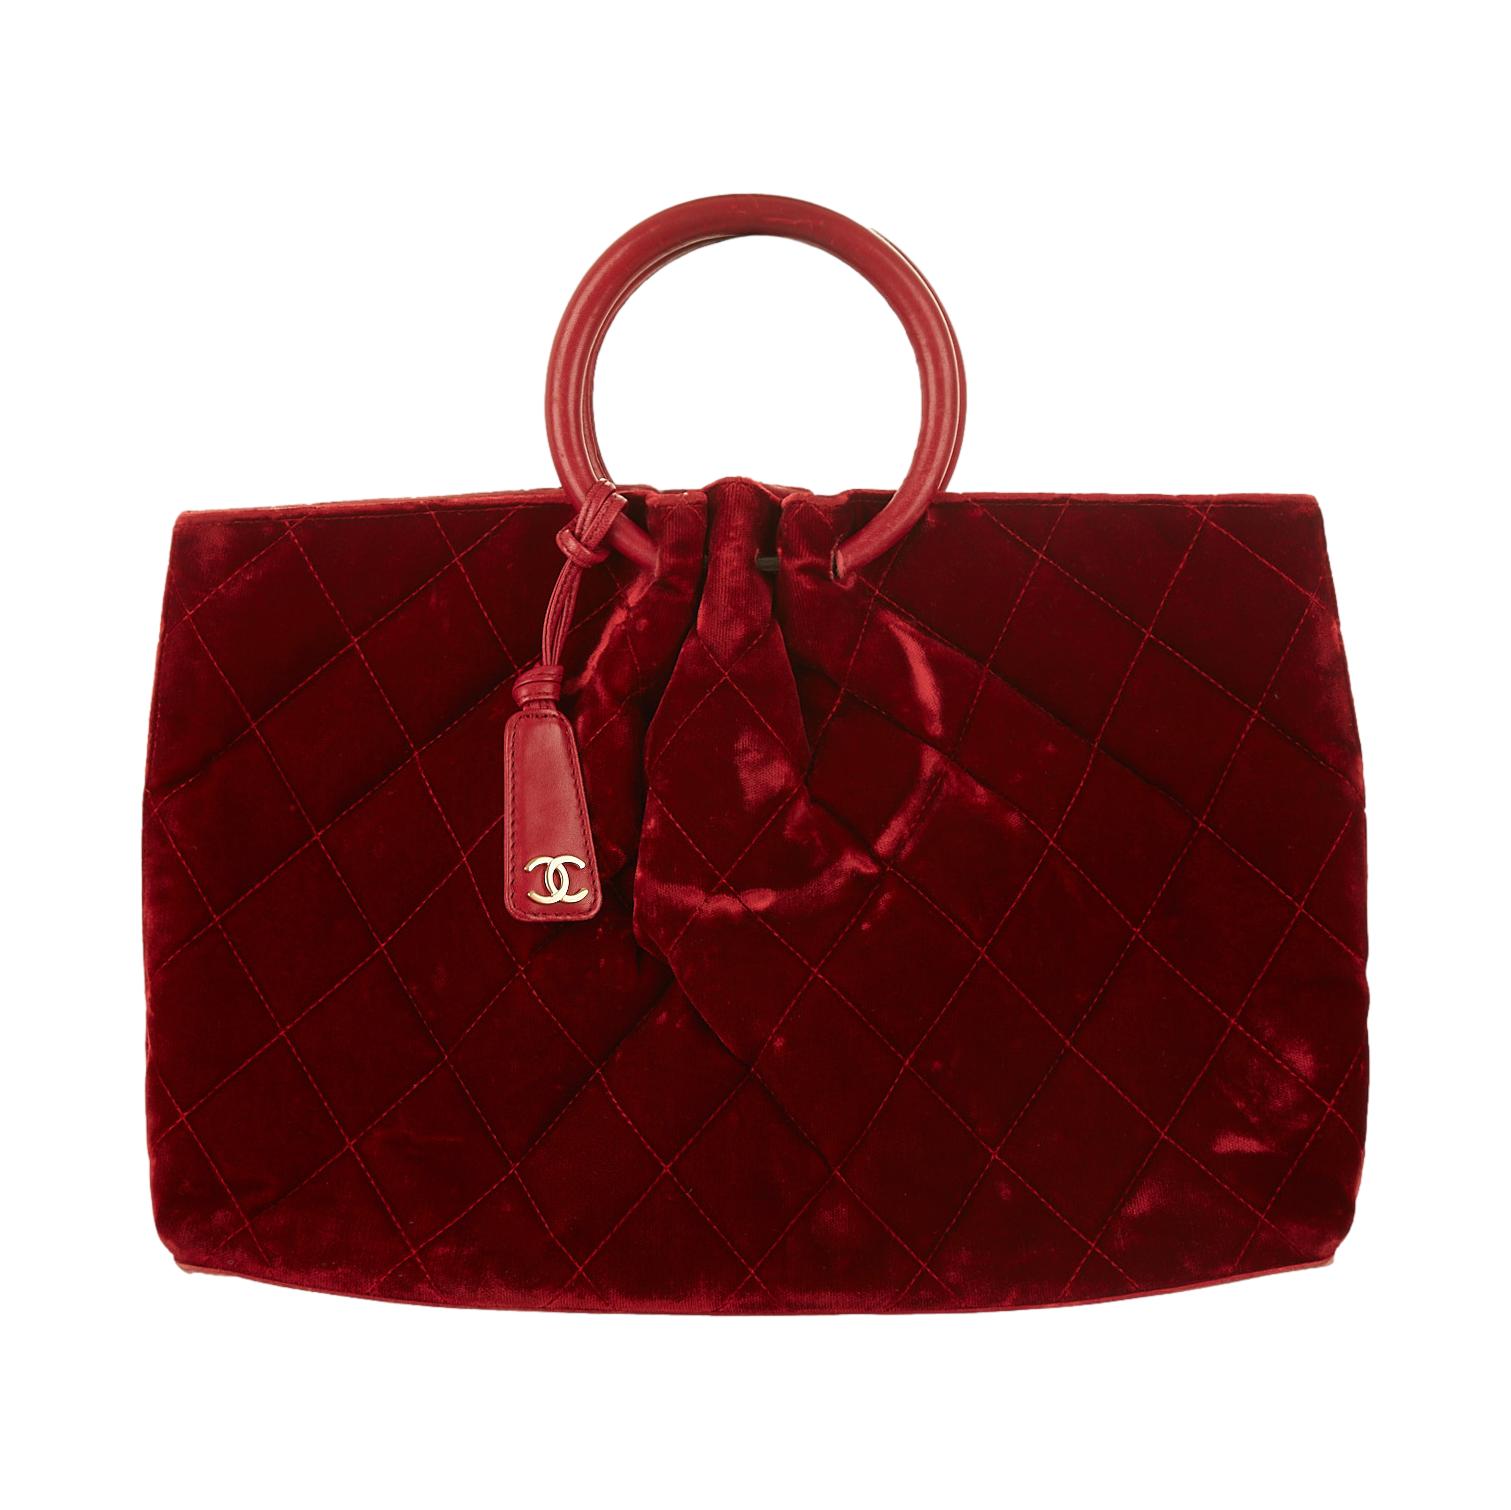 Chanel Red Velvet Top Handle Bag